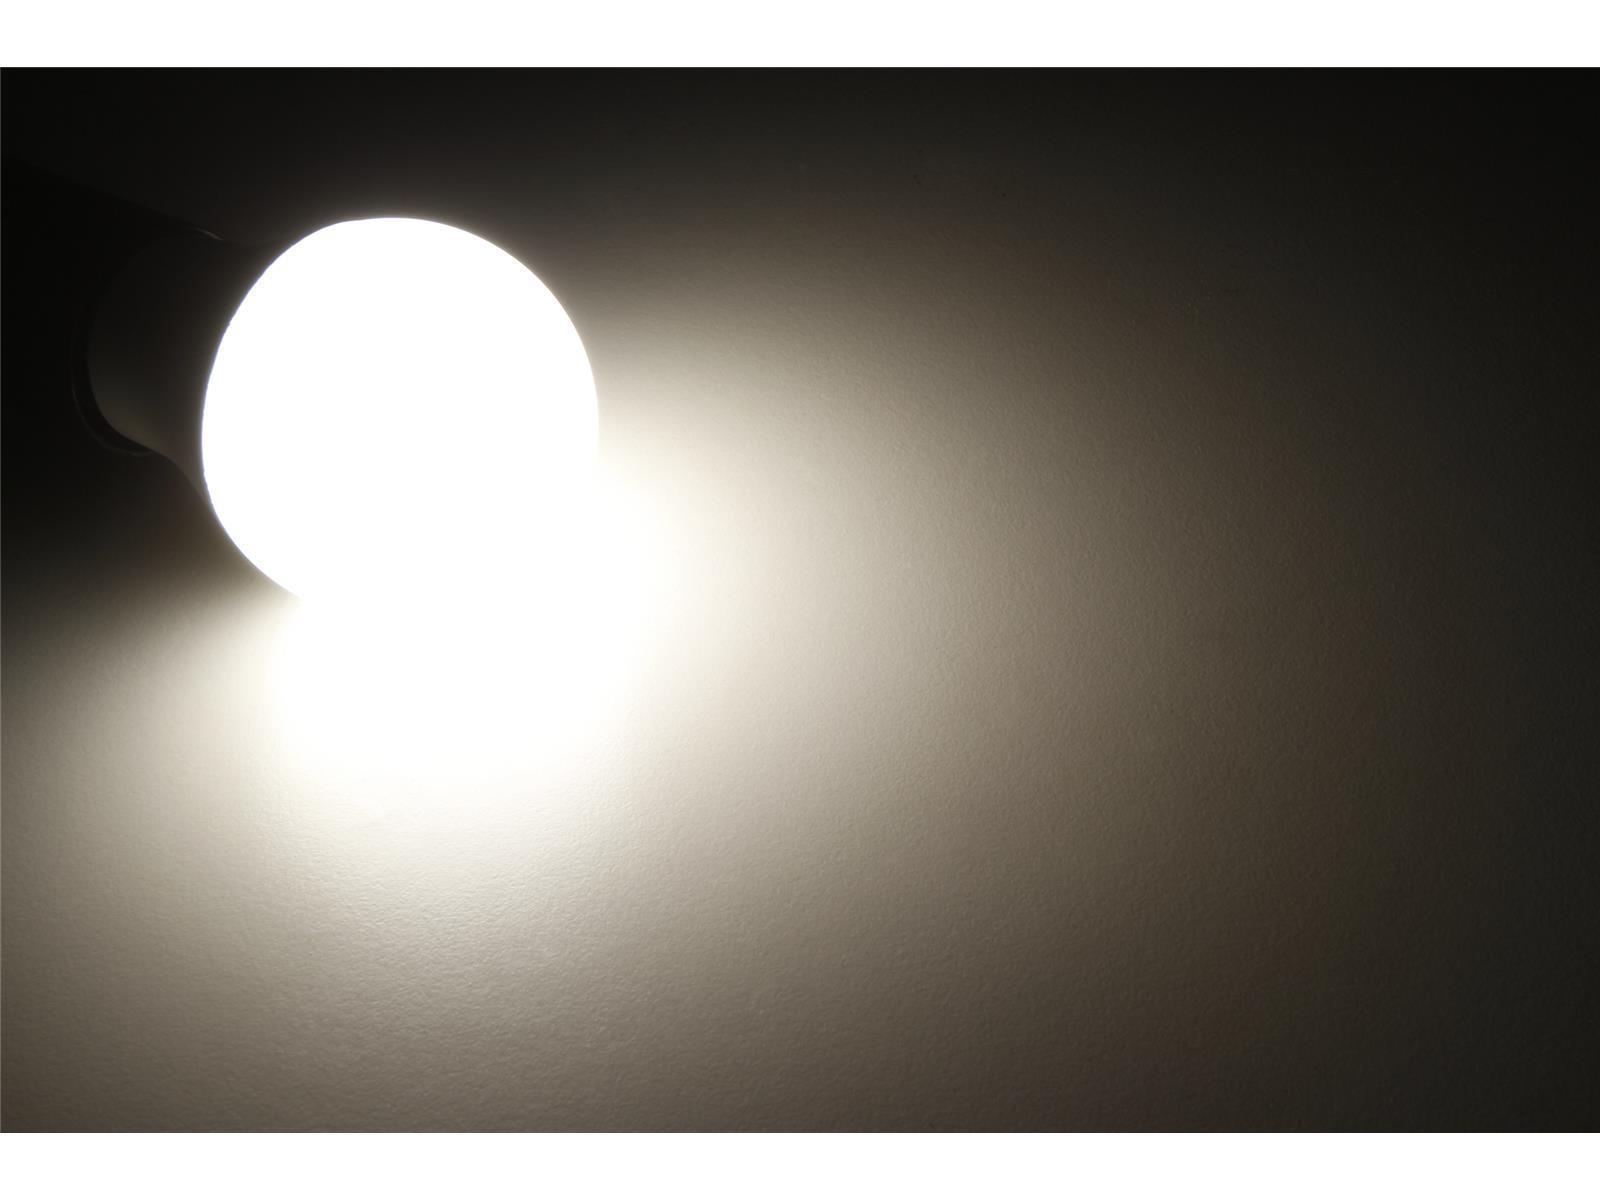 LED Glühlampe McShine, E27, 11W, 1.055 lm, 3000K, warmweiß, step dimmbar 100/50/10%